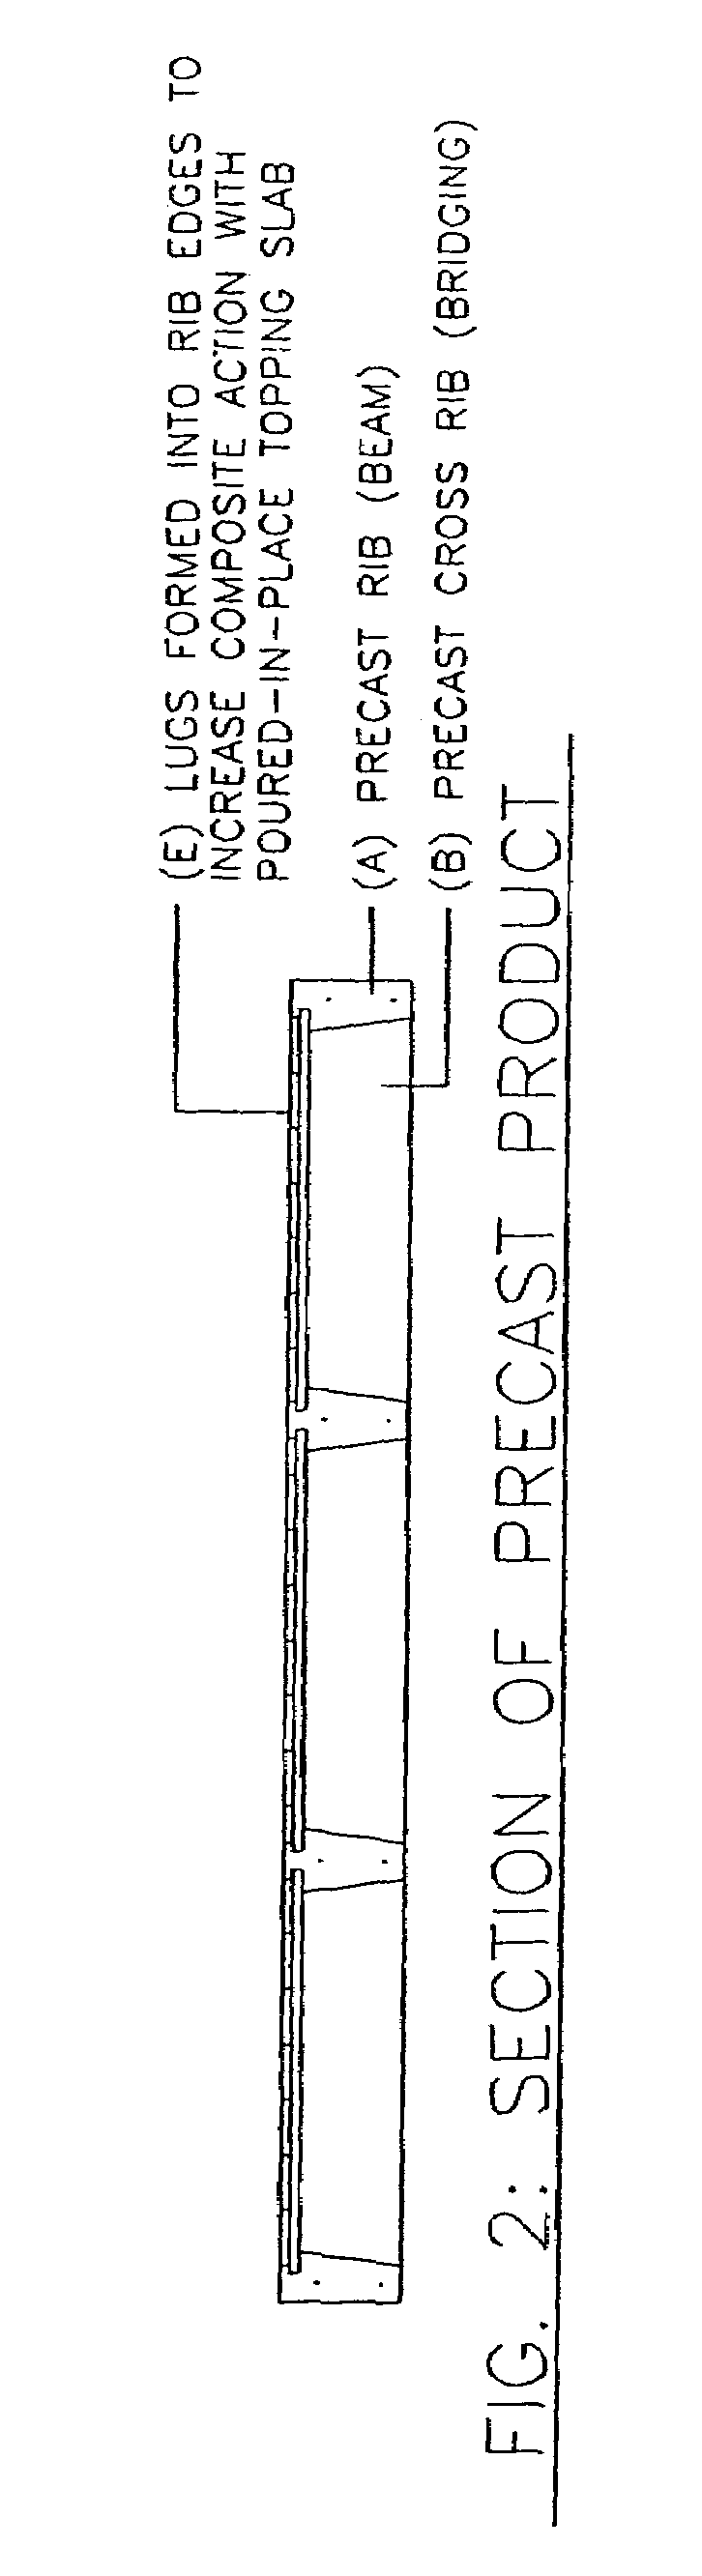 Hybrid precast concrete and metal deck floor panel